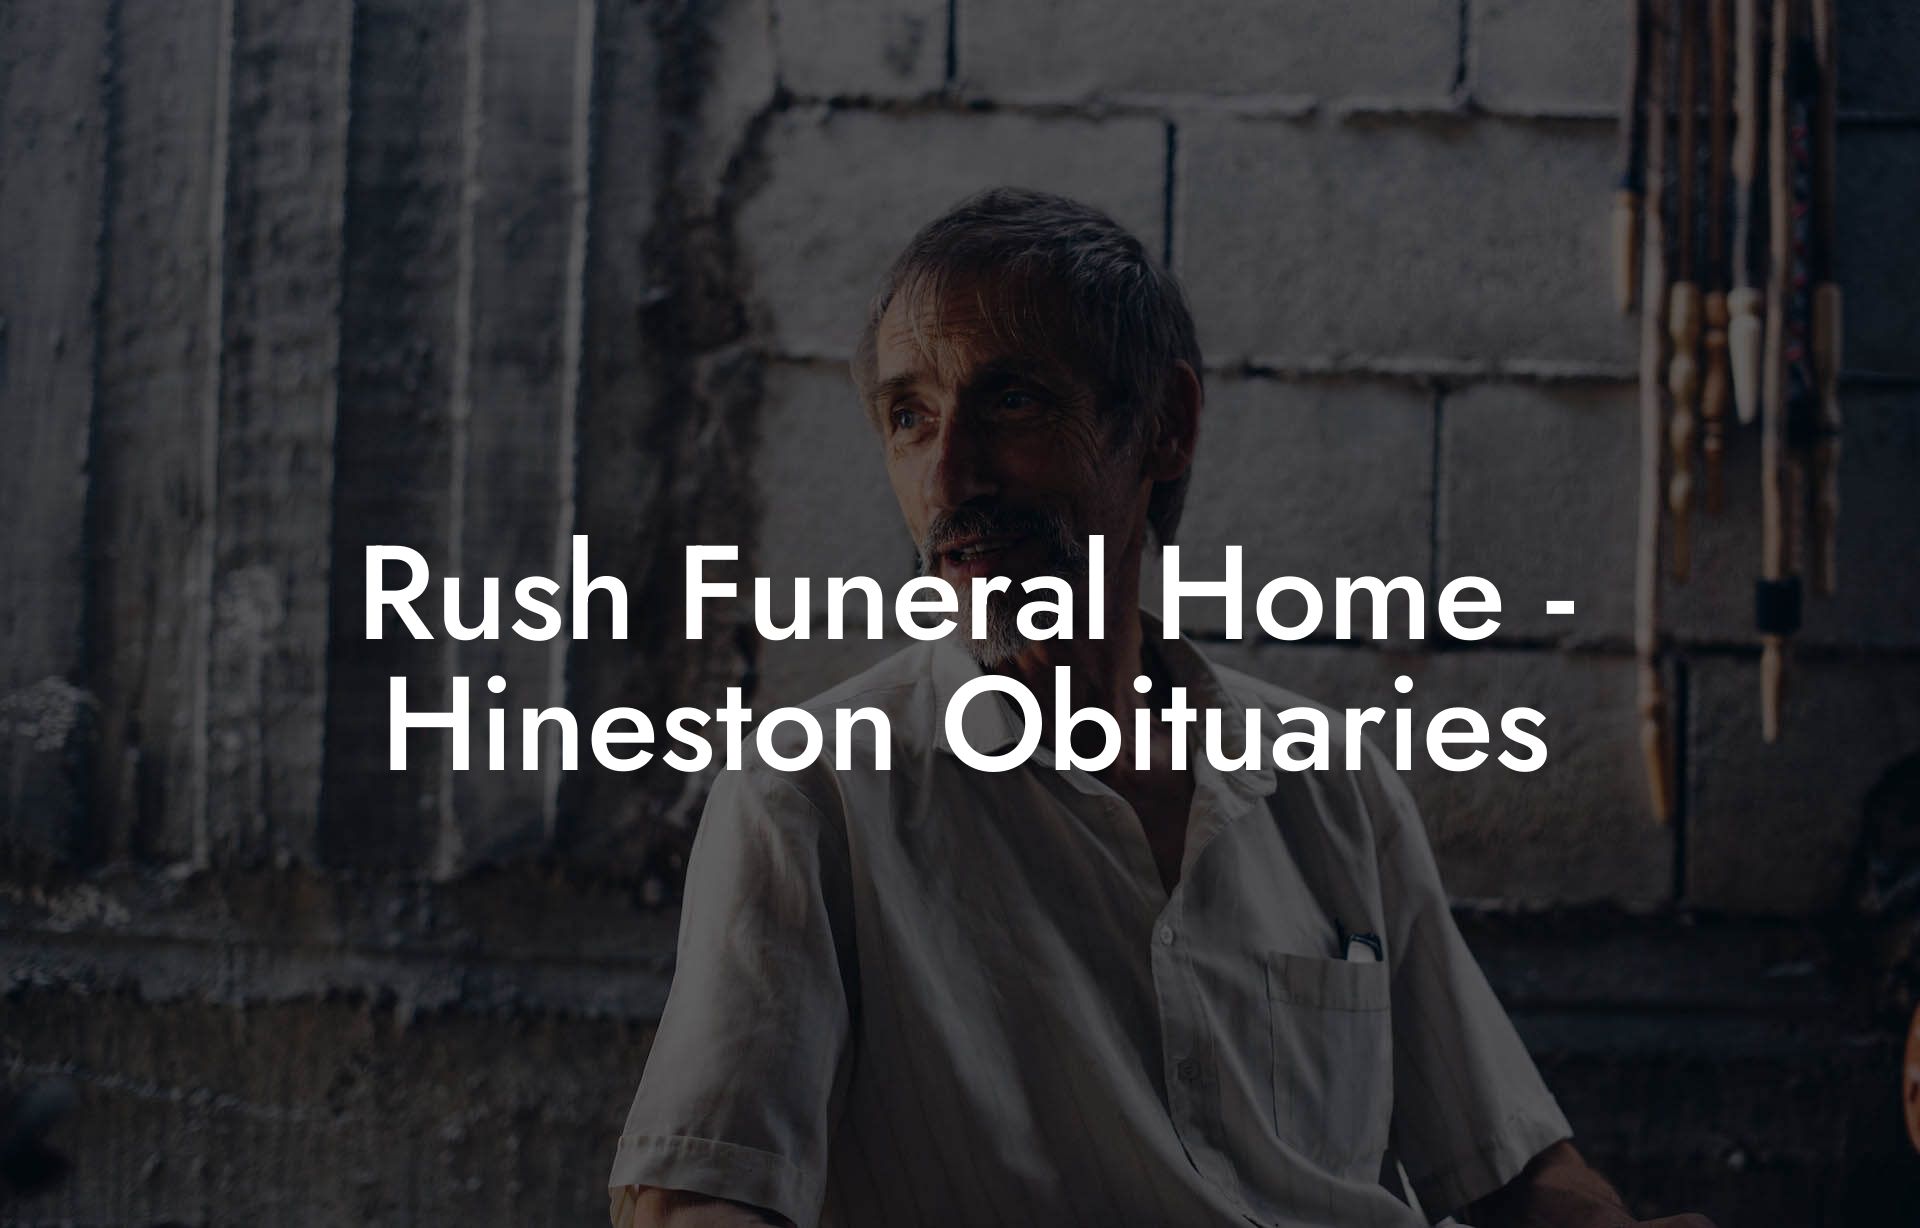 Rush Funeral Home - Hineston Obituaries